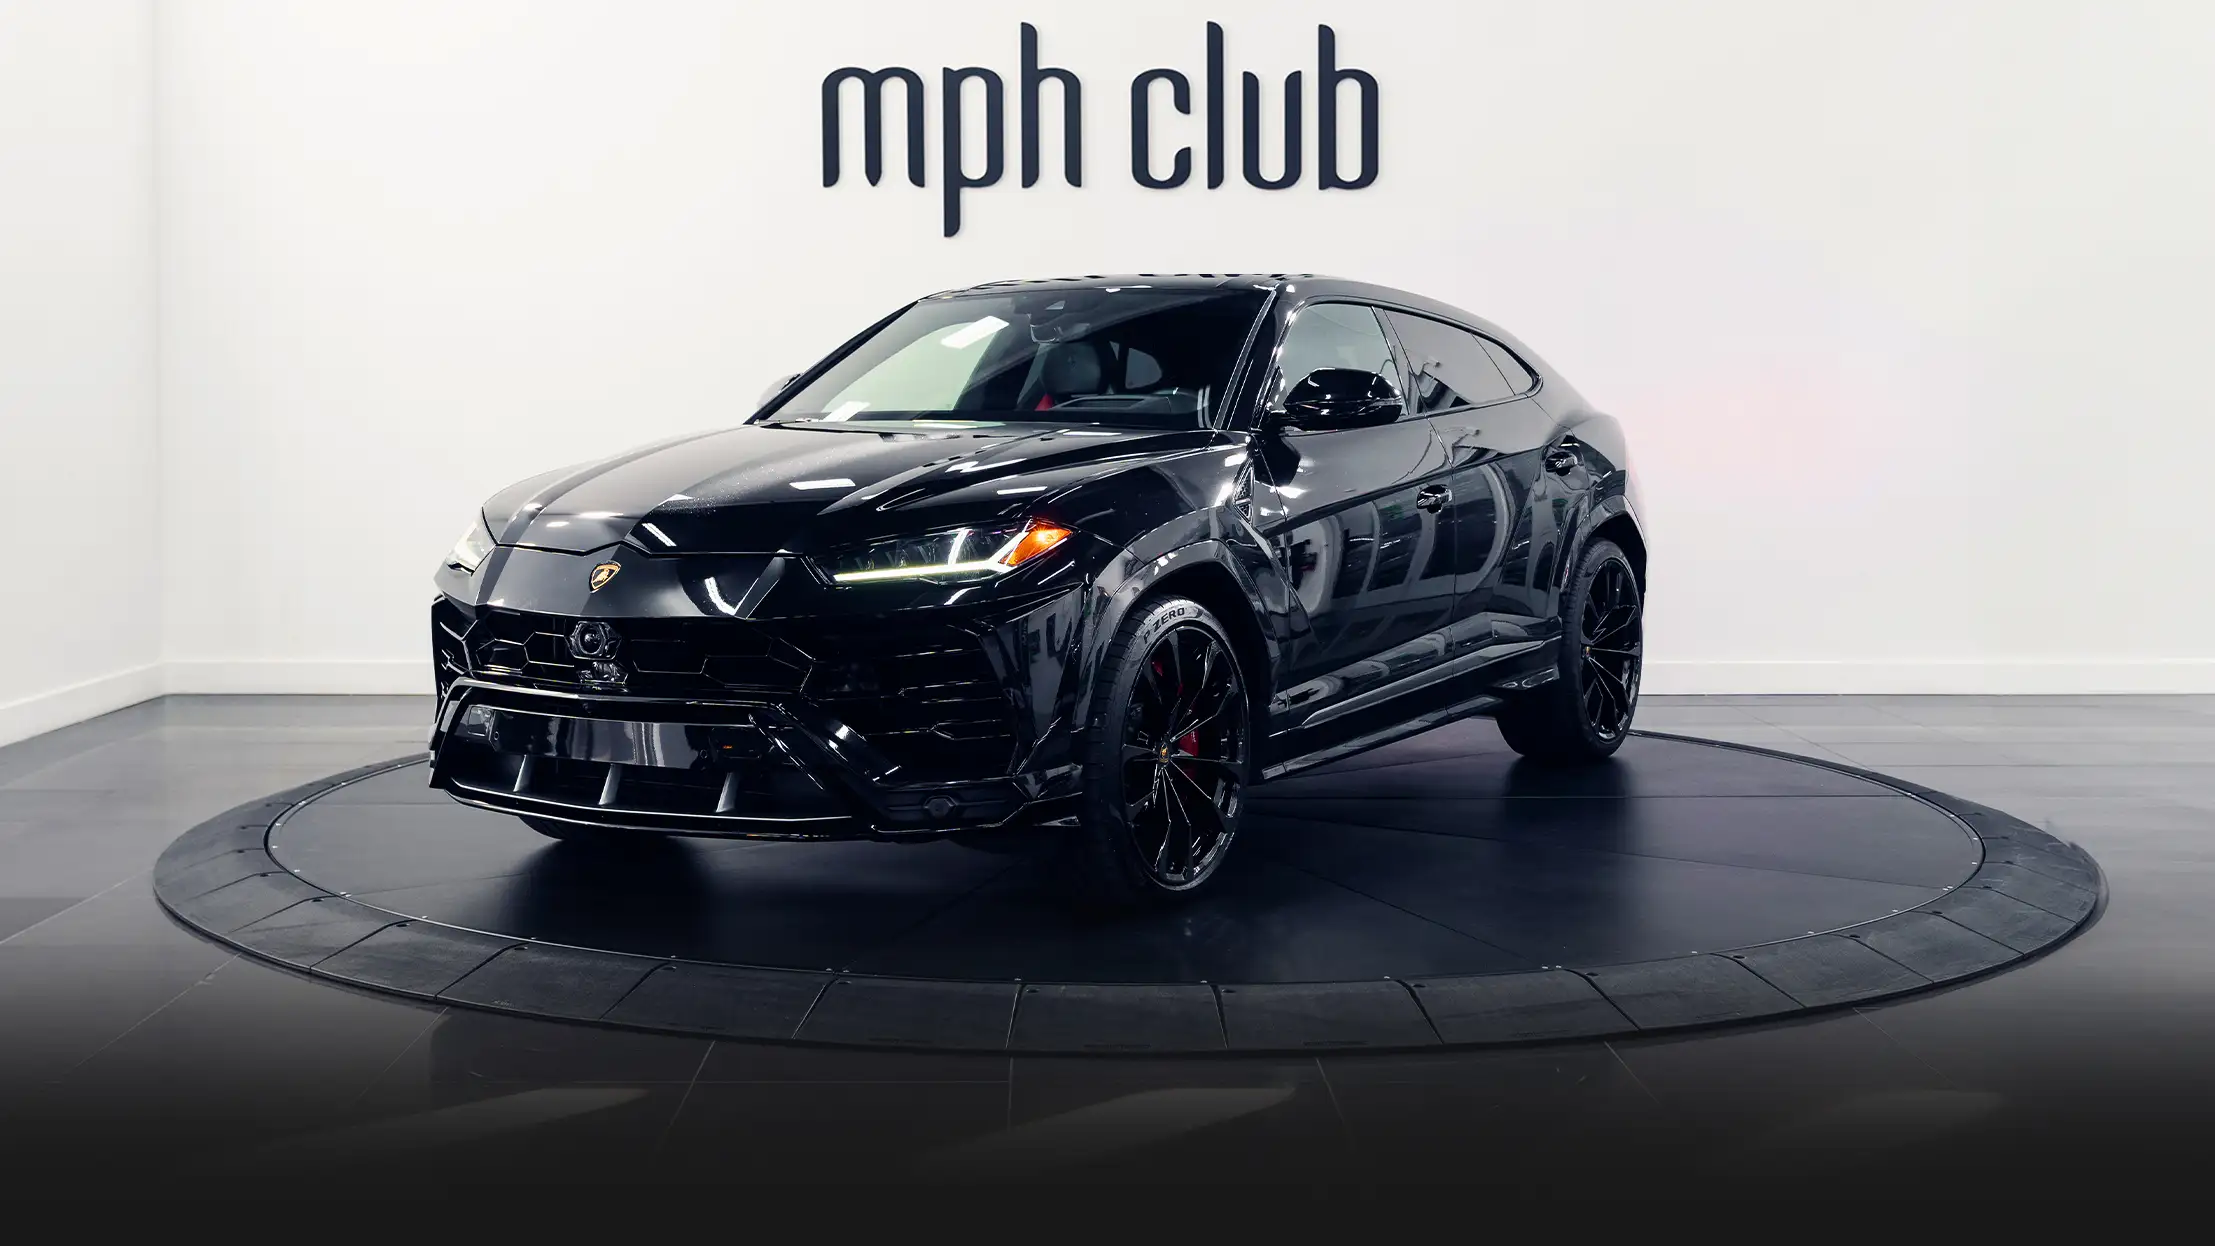 Black on red Lamborghini Urus rental profile view turntable - mph club